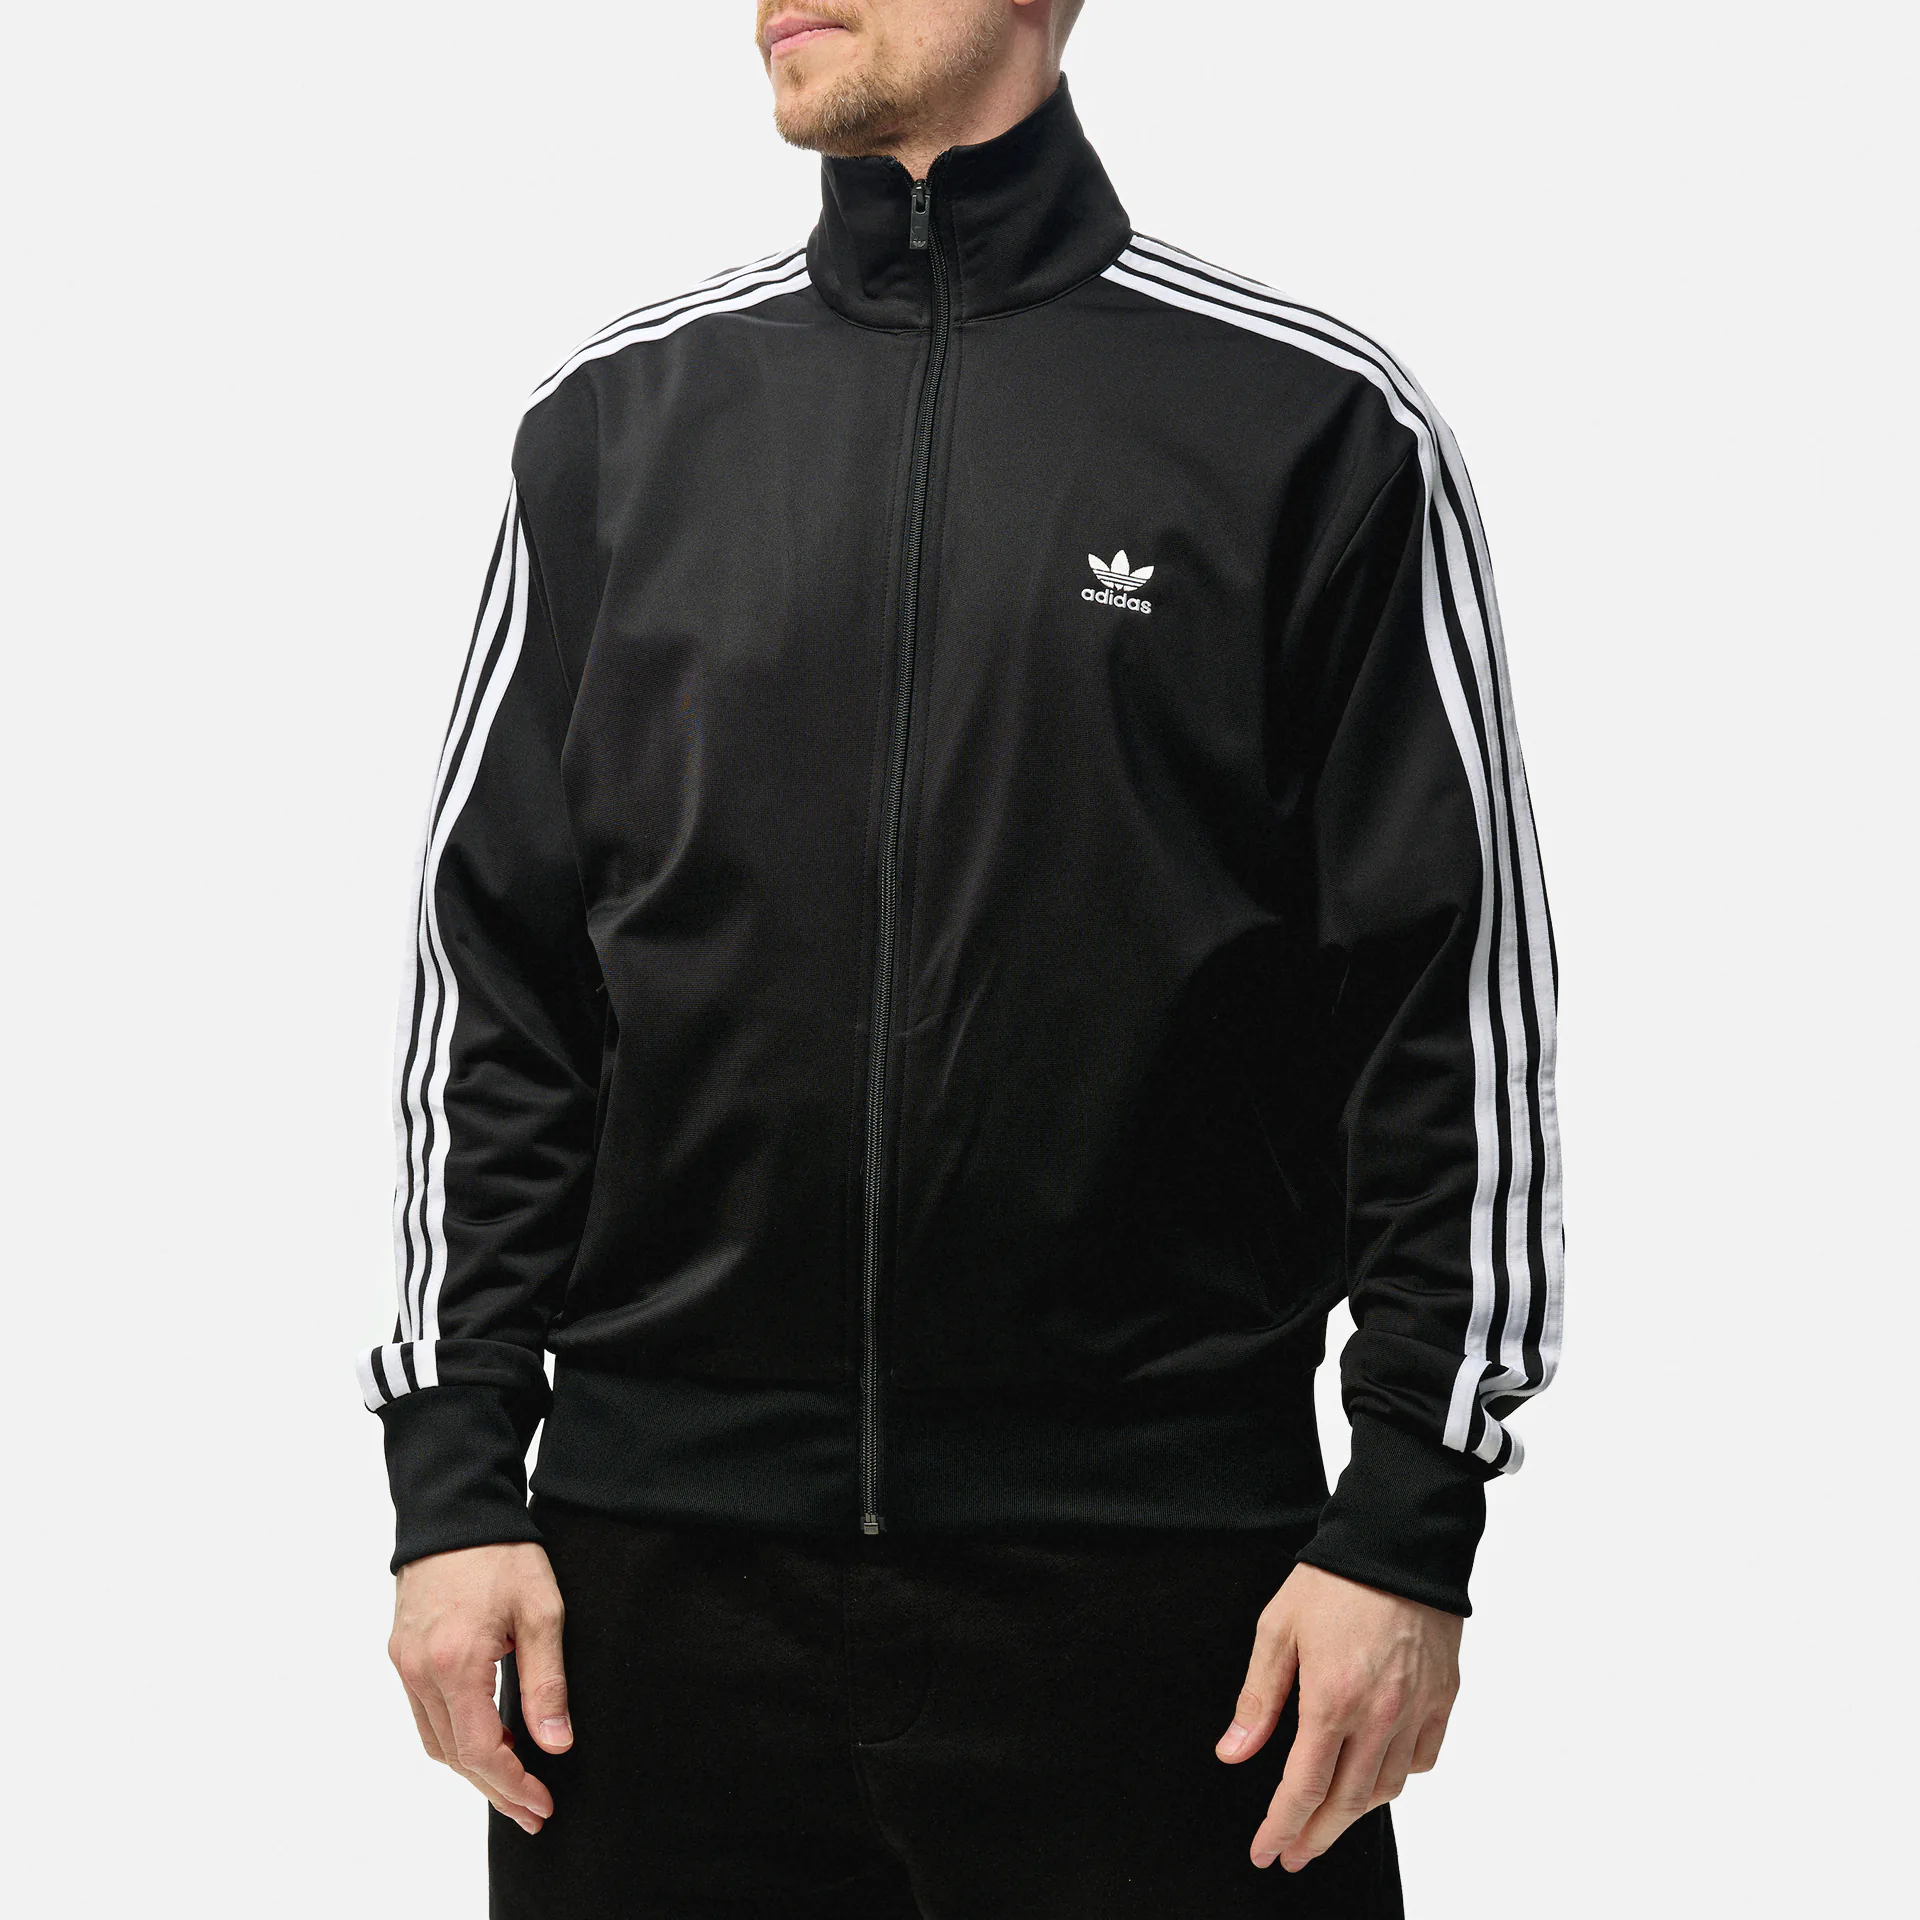 Adidas Firebird Track Jacket Black/White